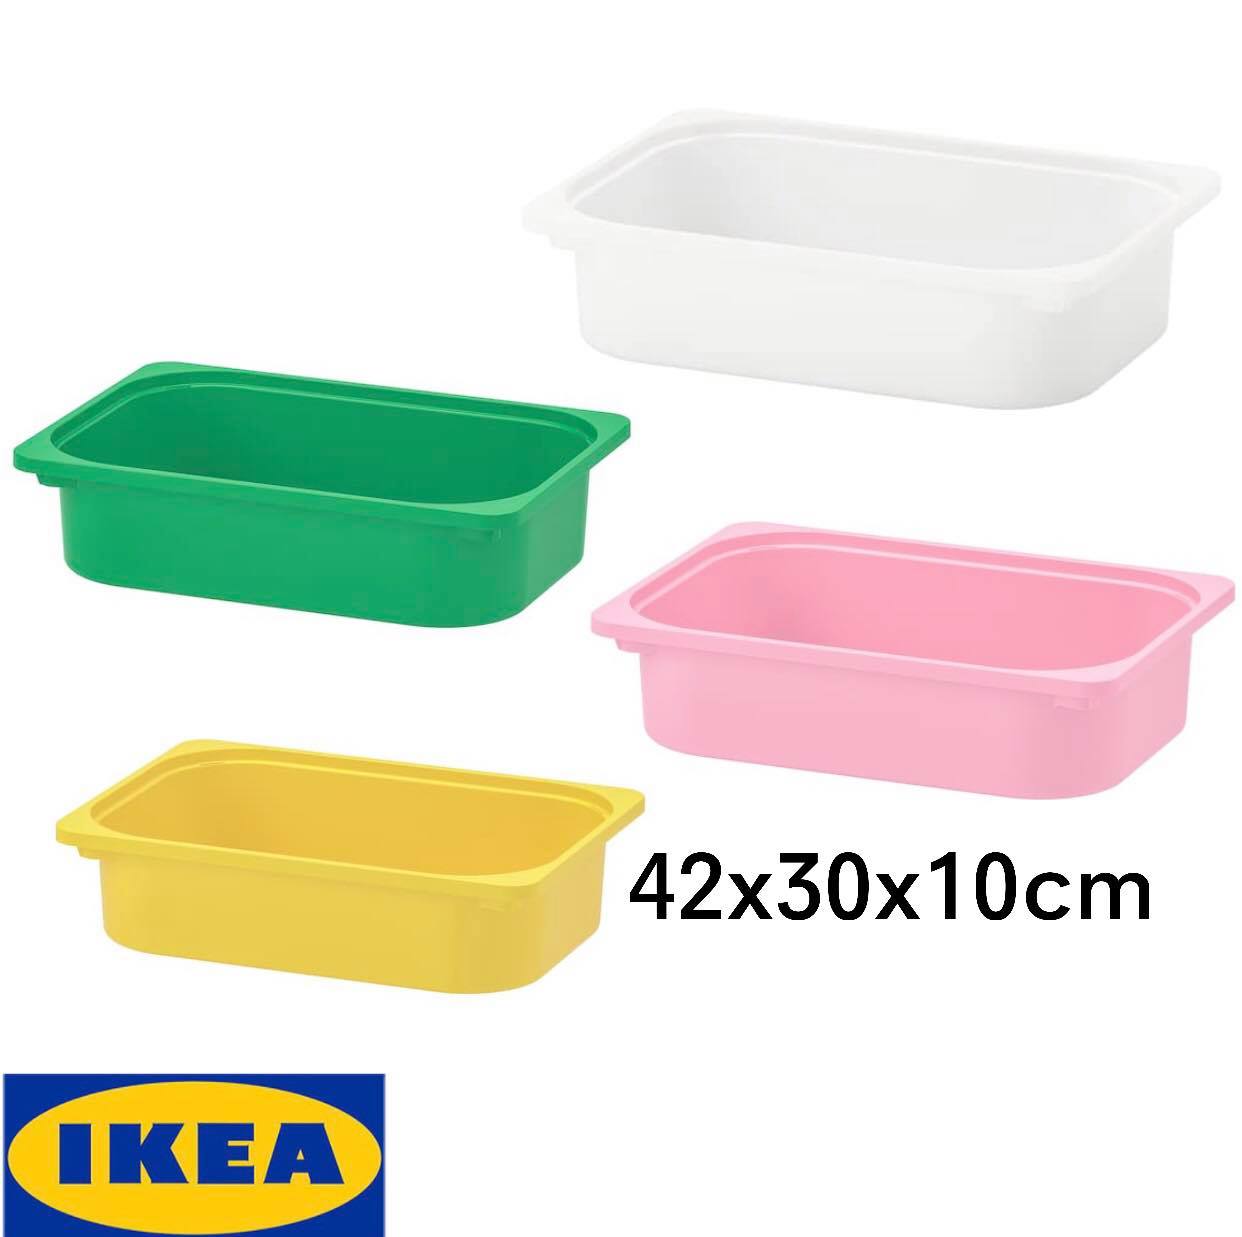 IKEA ของแท้ TROFAST ทรูฟัสท์ กล่องเก็บของ,42x30x10 ซม.***มีหลายสีให้เลือก***